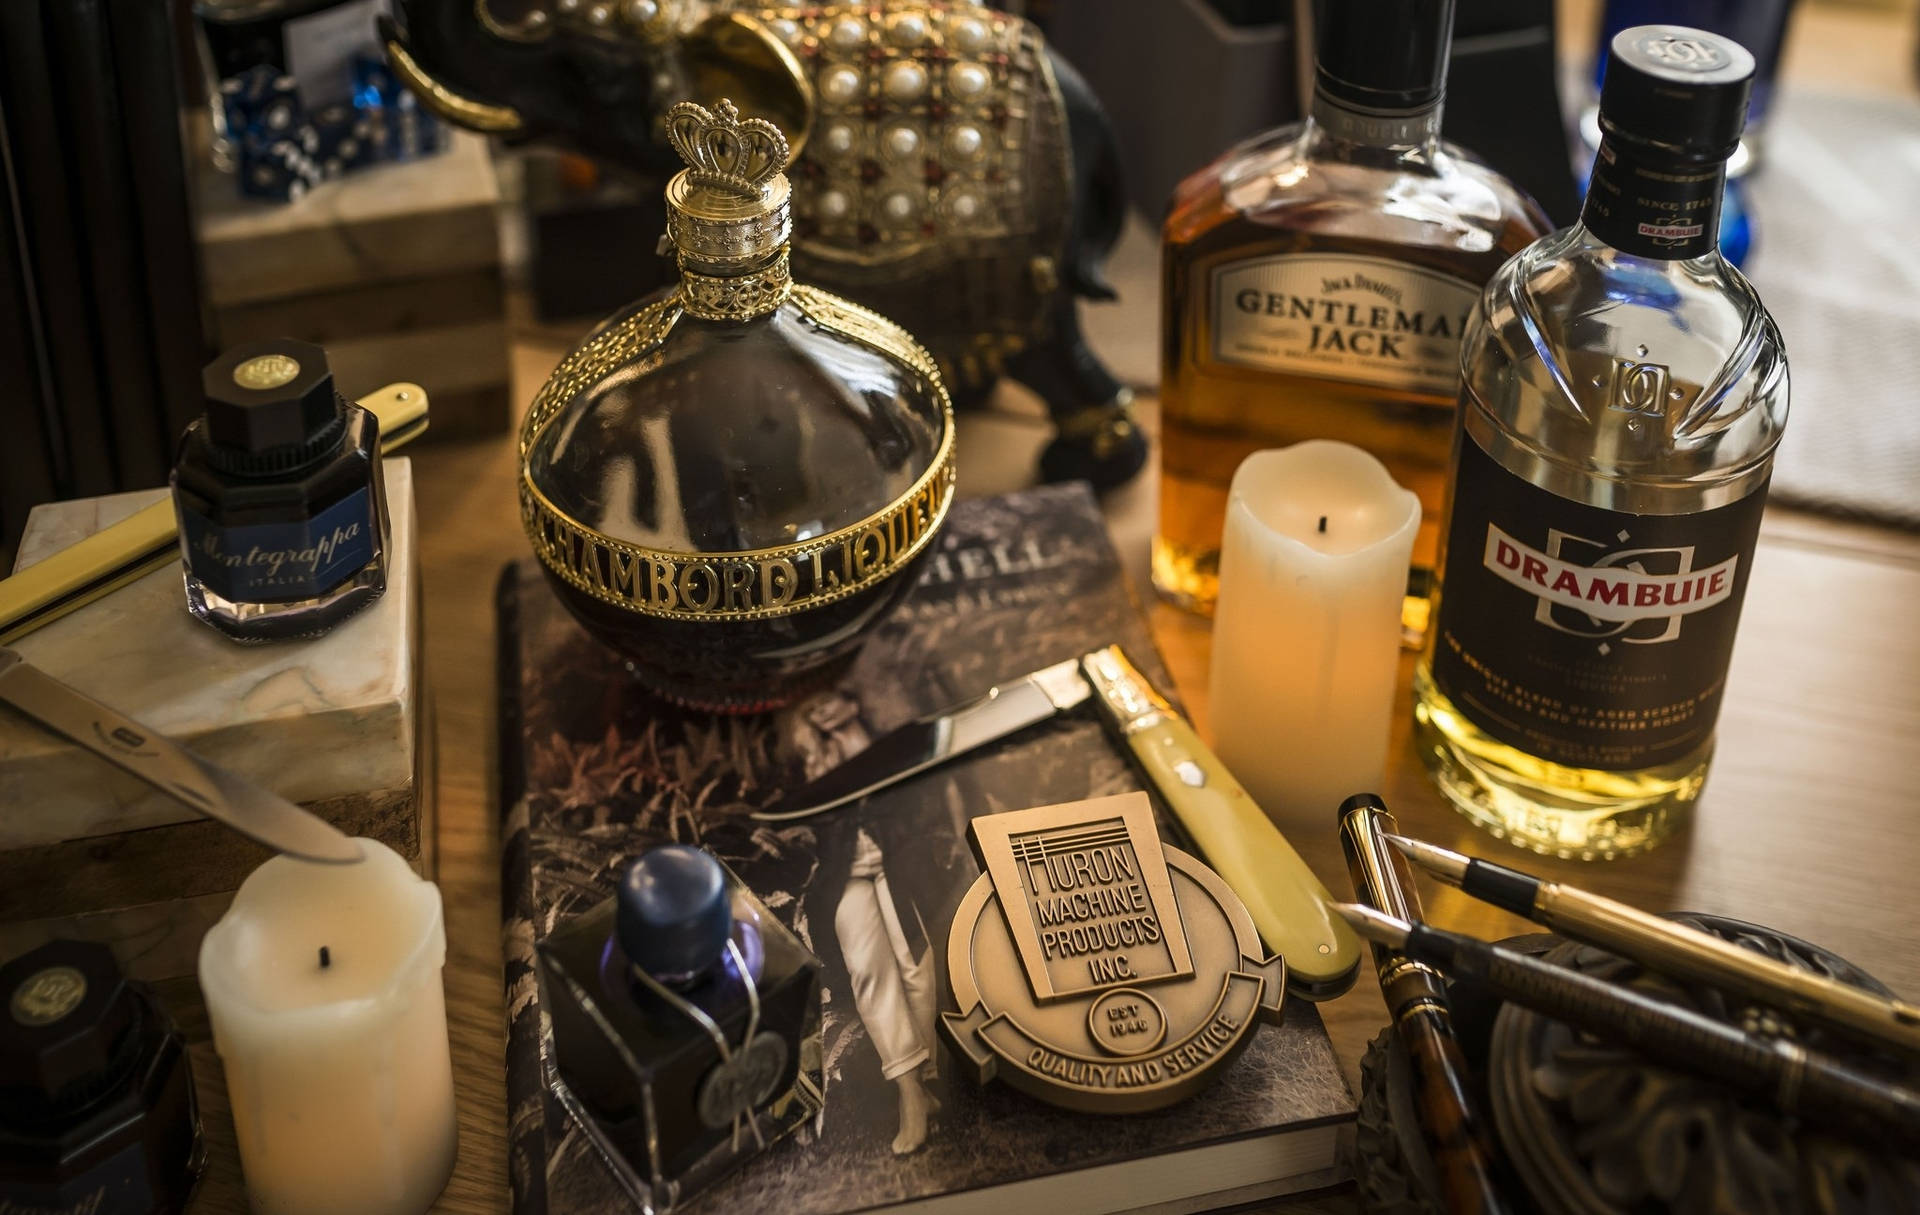 Drambuie Scotch Whisky And Gentleman Jack Wallpaper